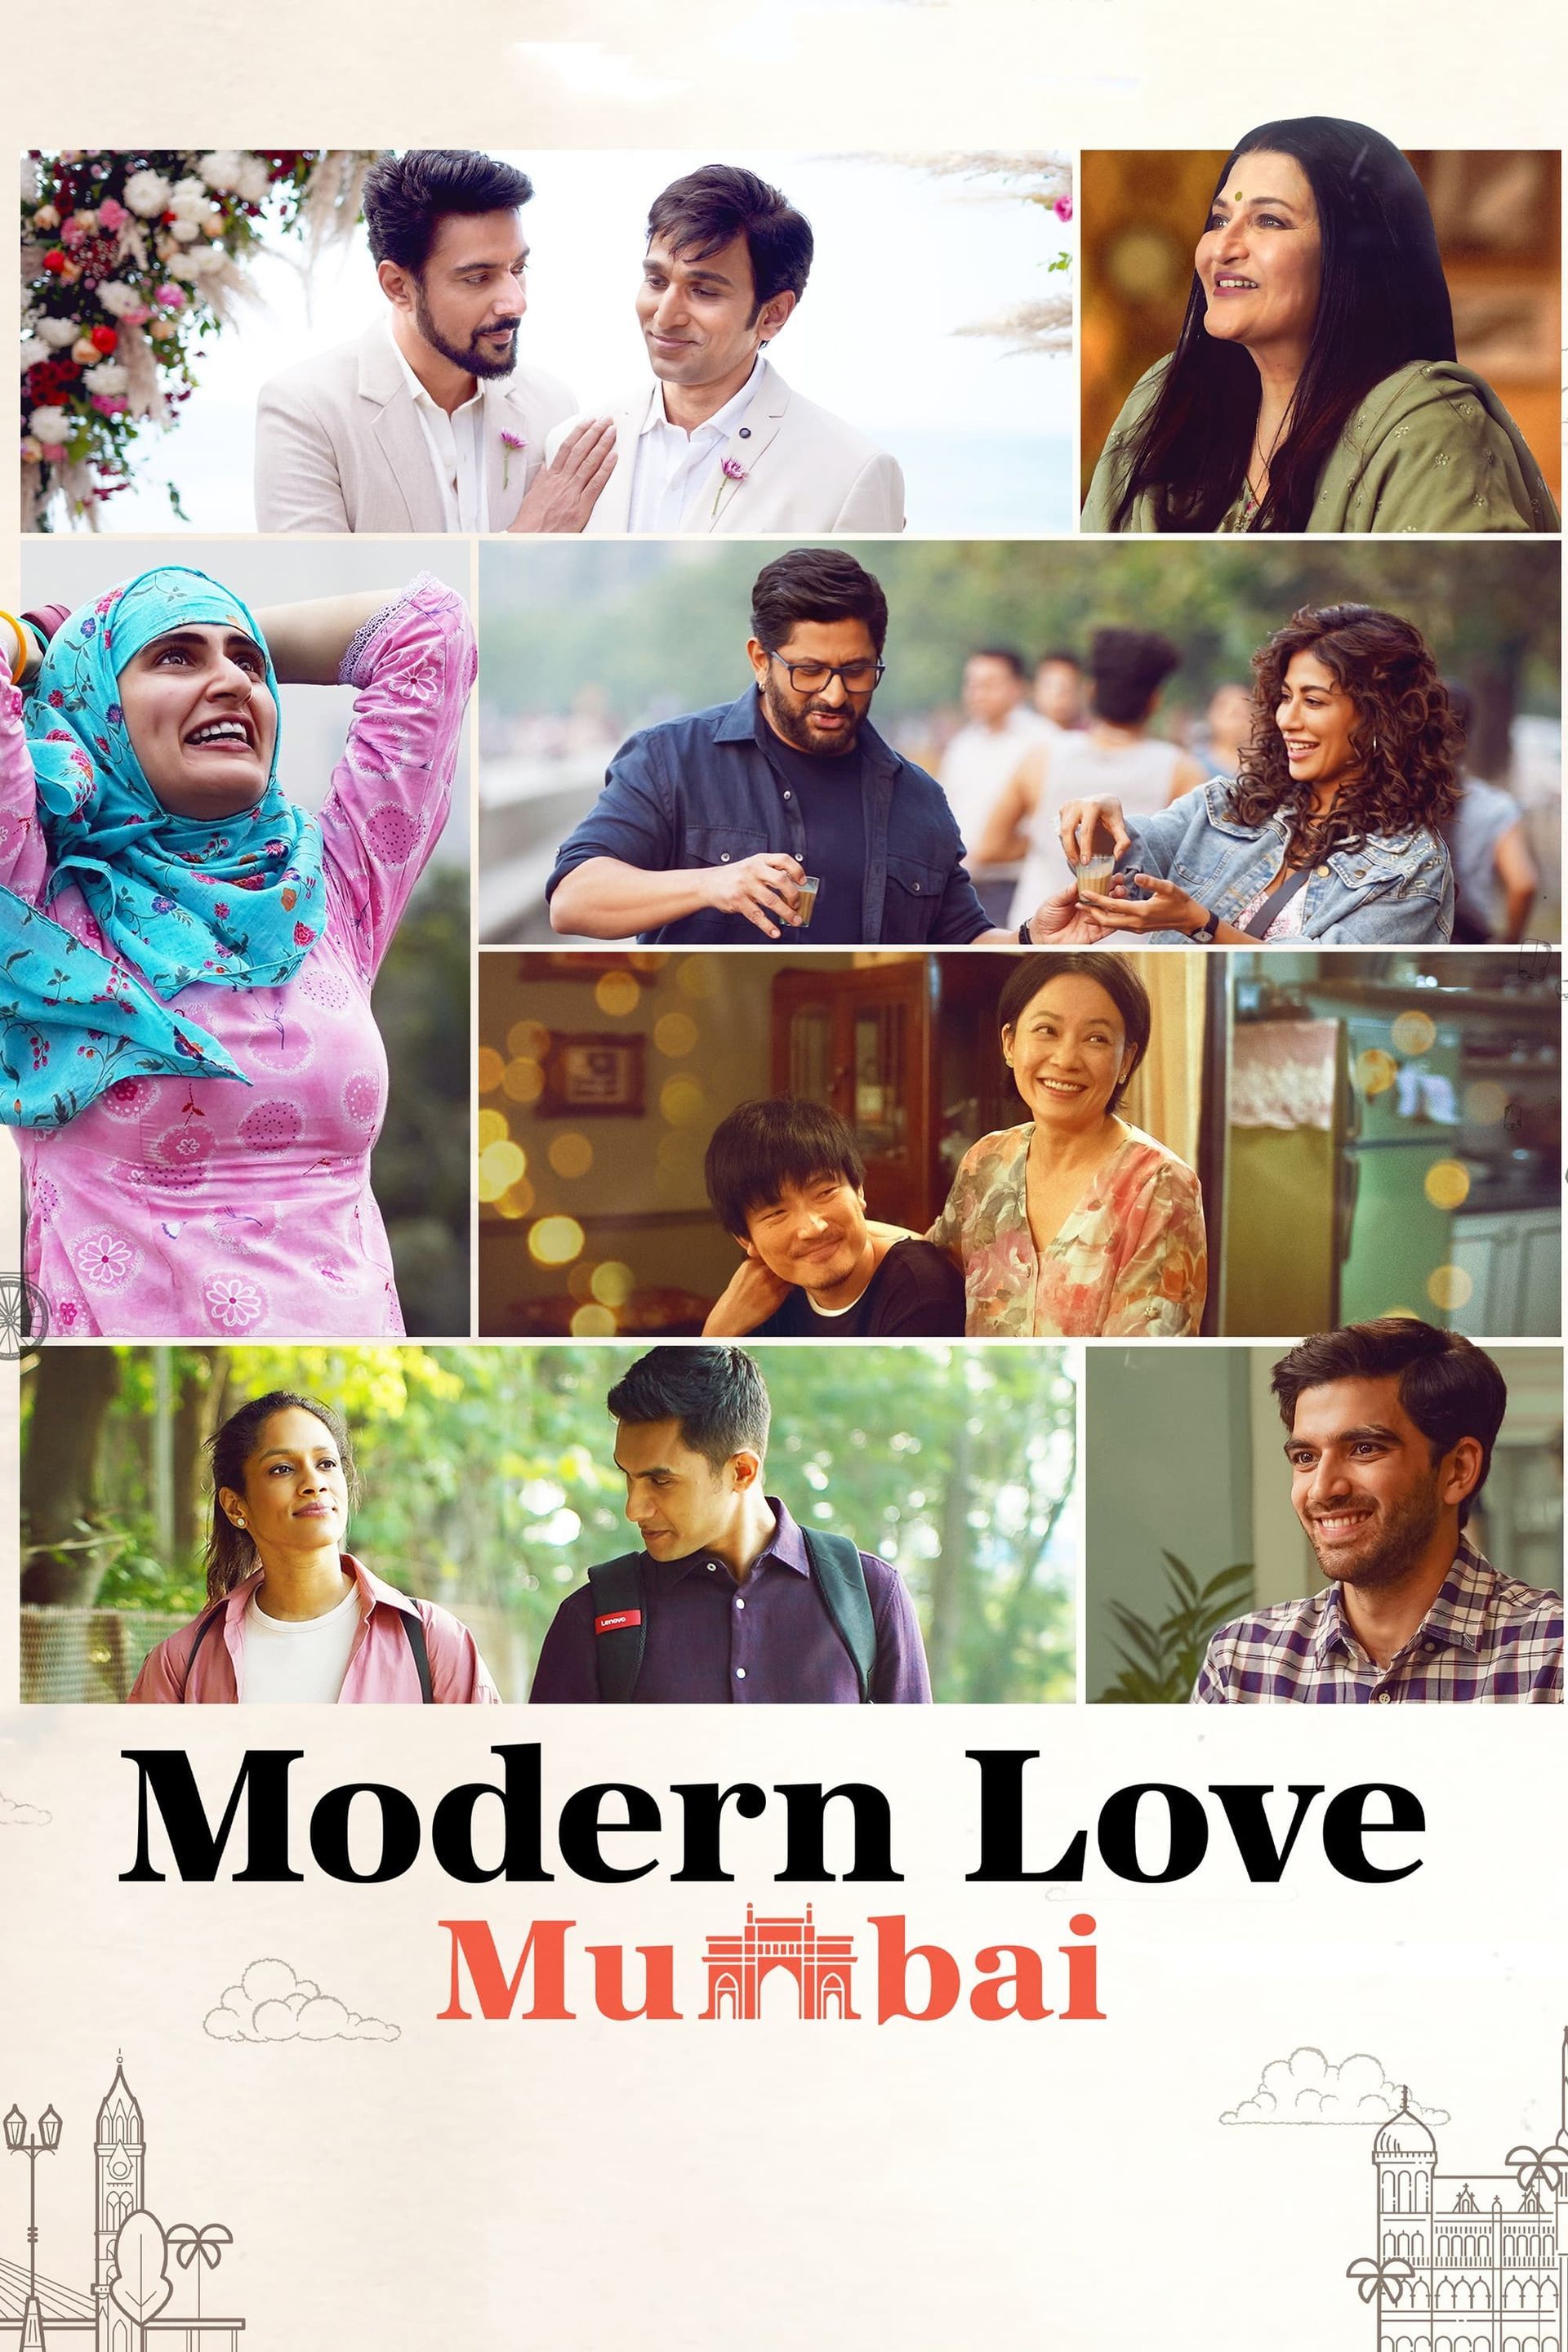 Modern Love - watch tv show streaming online